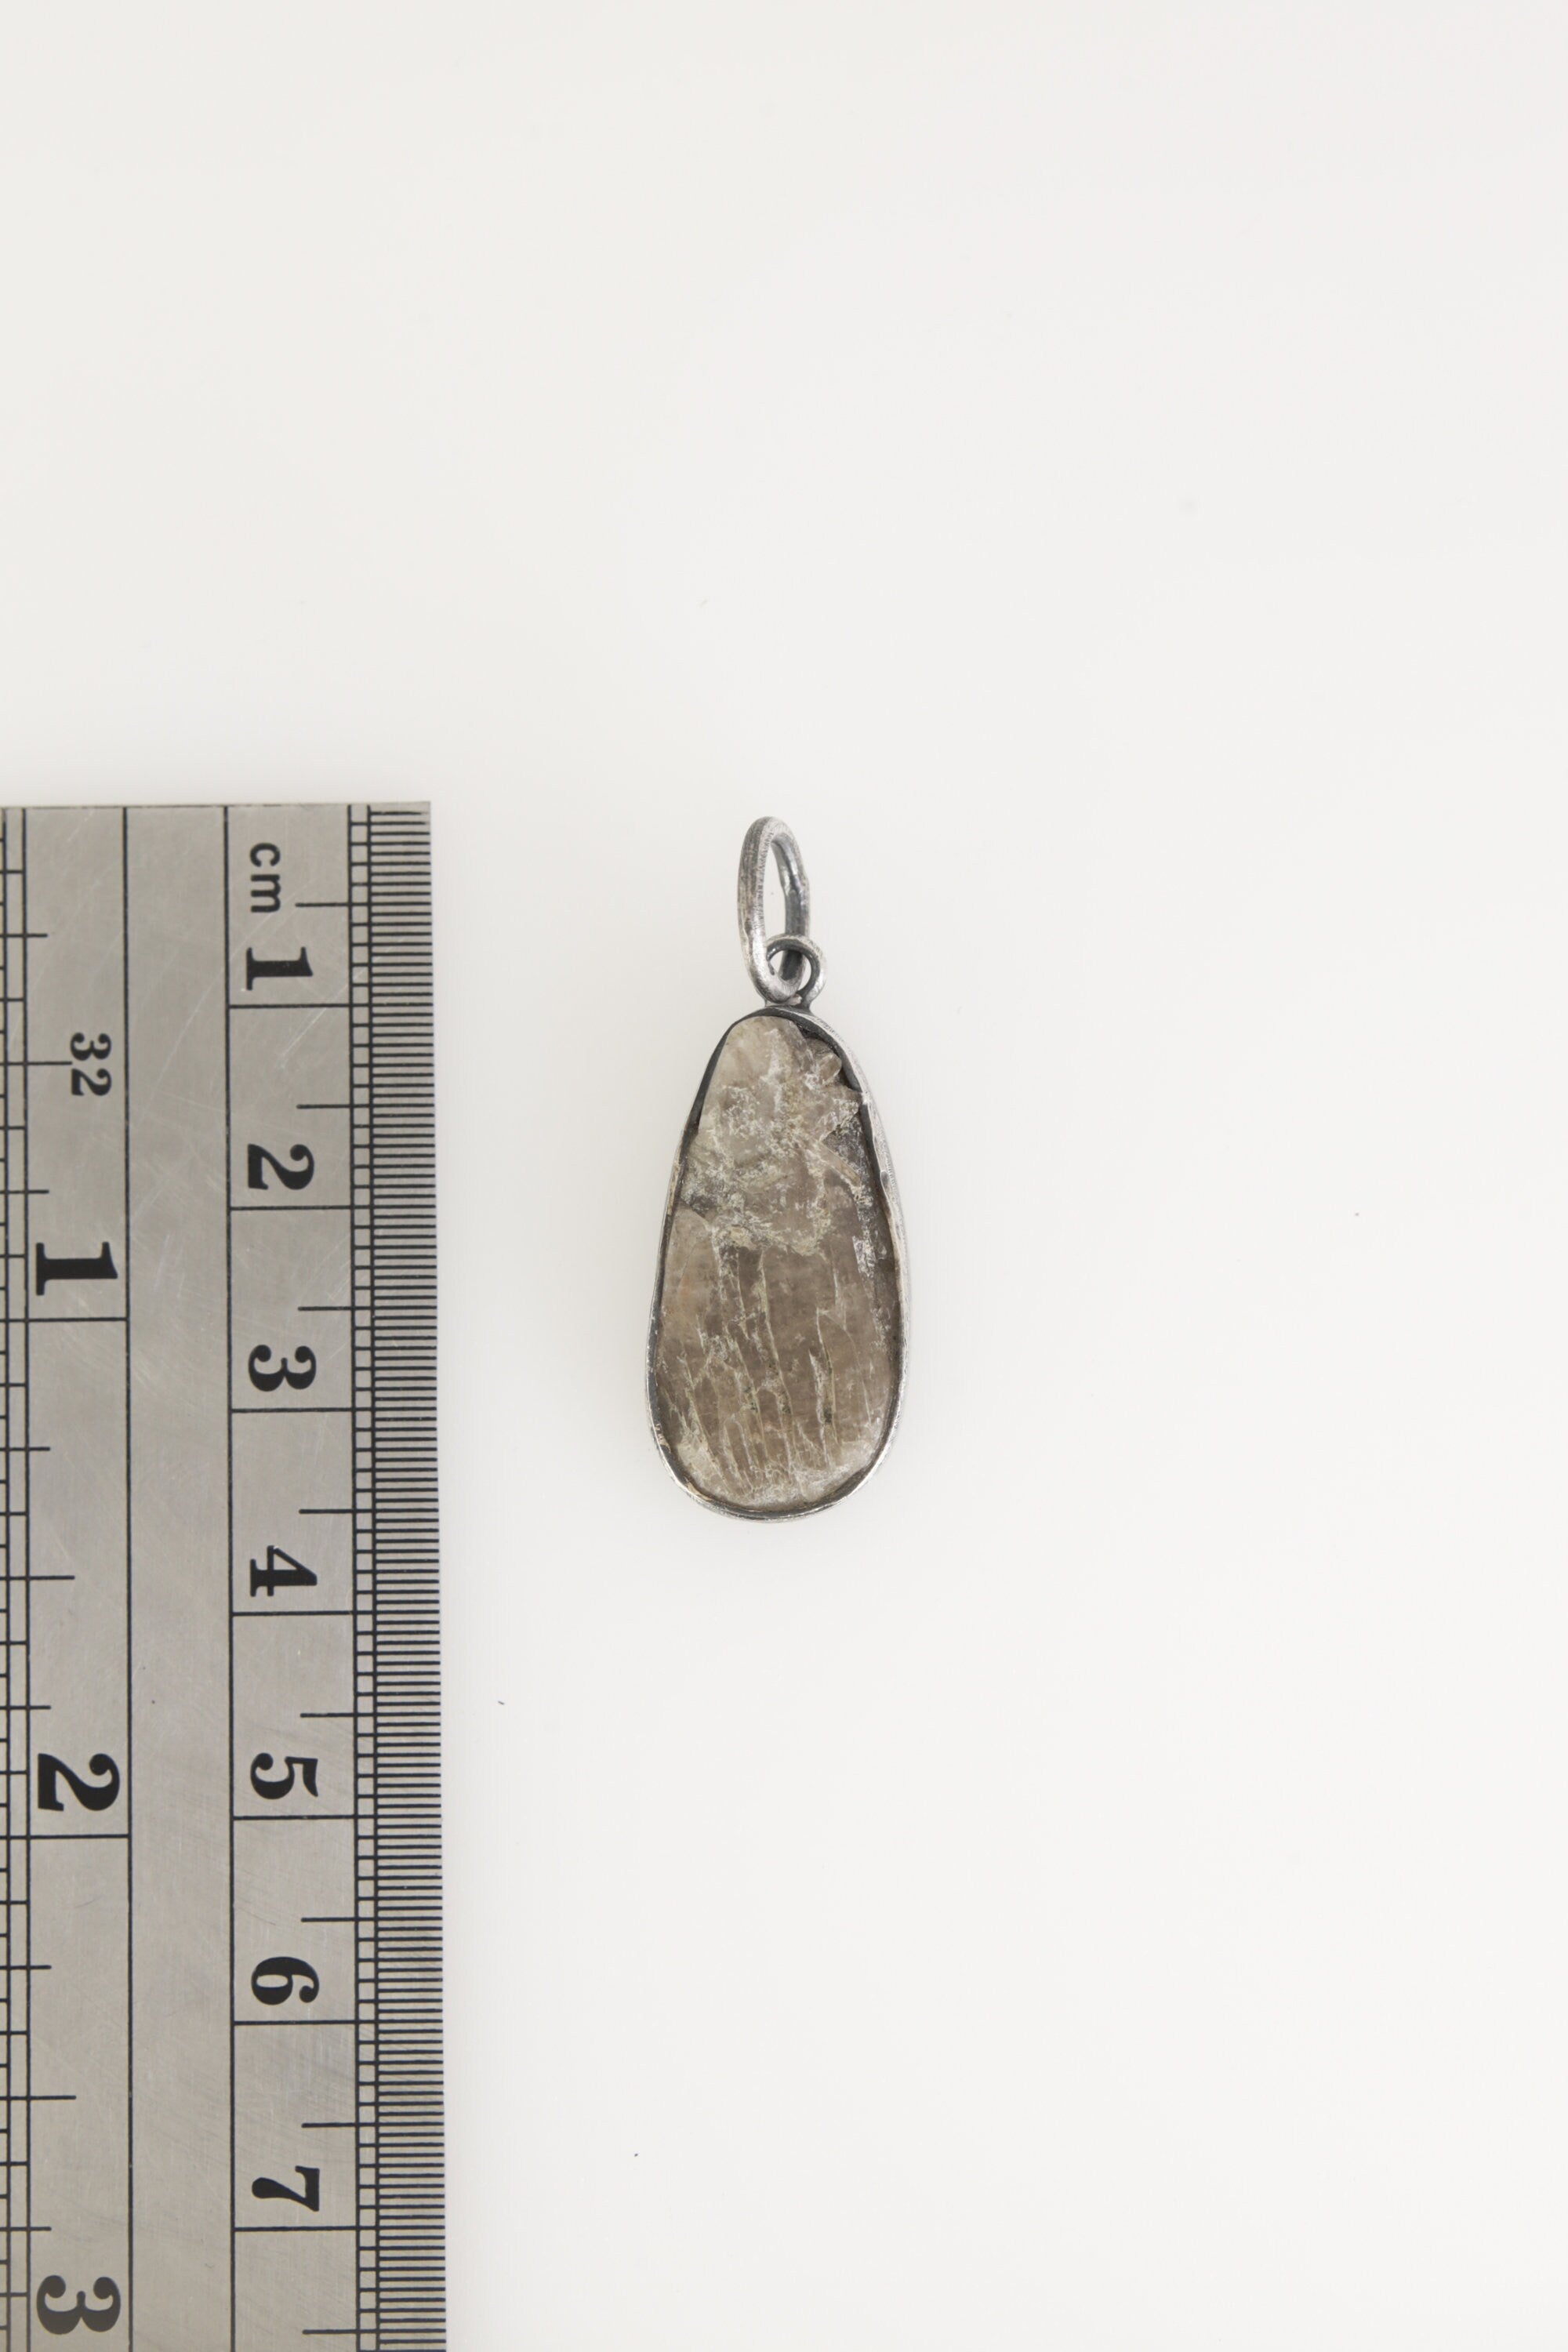 Ethereal Torrington Citrine Pendant - Sterling Silver - Oxidized - Brush Texture- NO/9